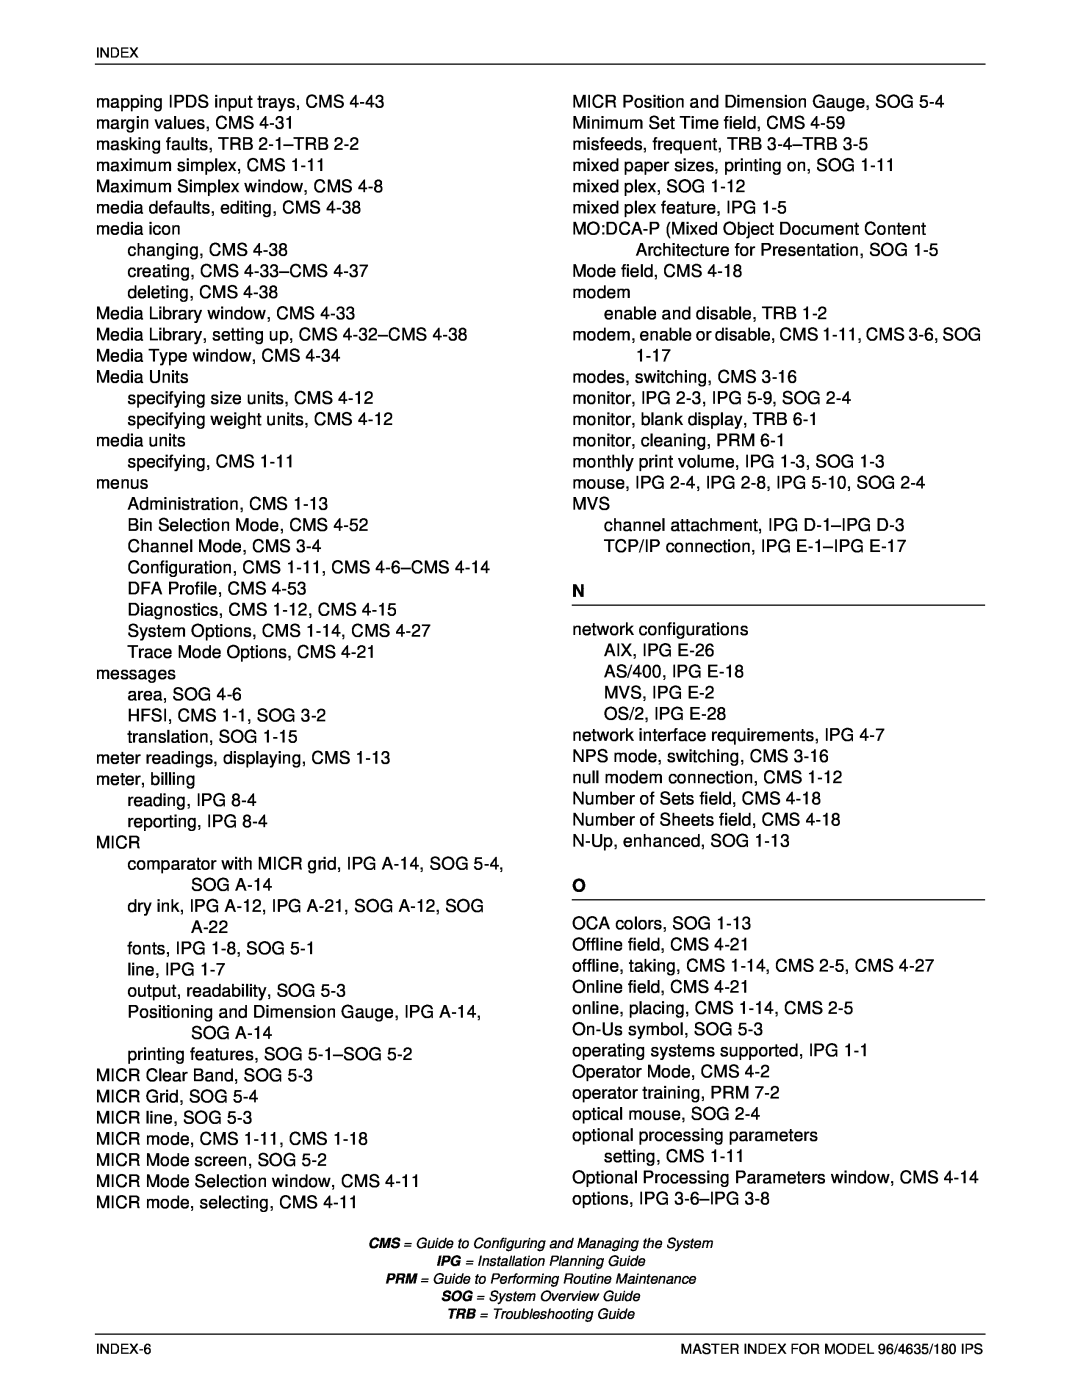 Xerox 4635 IPS, 96 IPS manual 